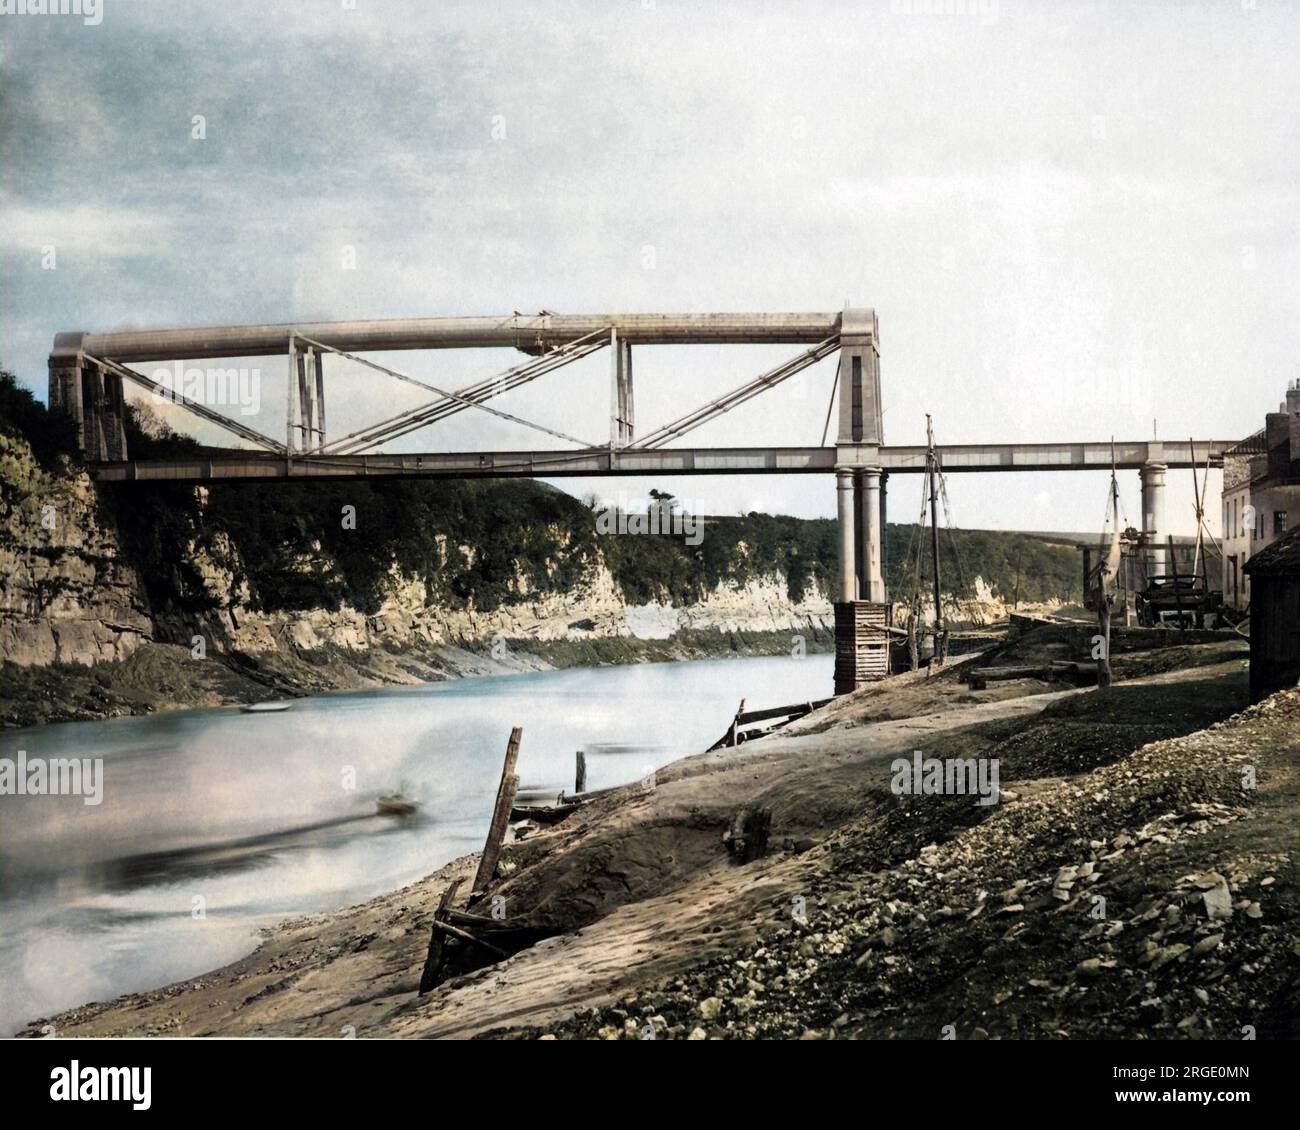 Brunel's Iron Railway Bridge over the River Wye at Chepstow, UK. Stock Photo